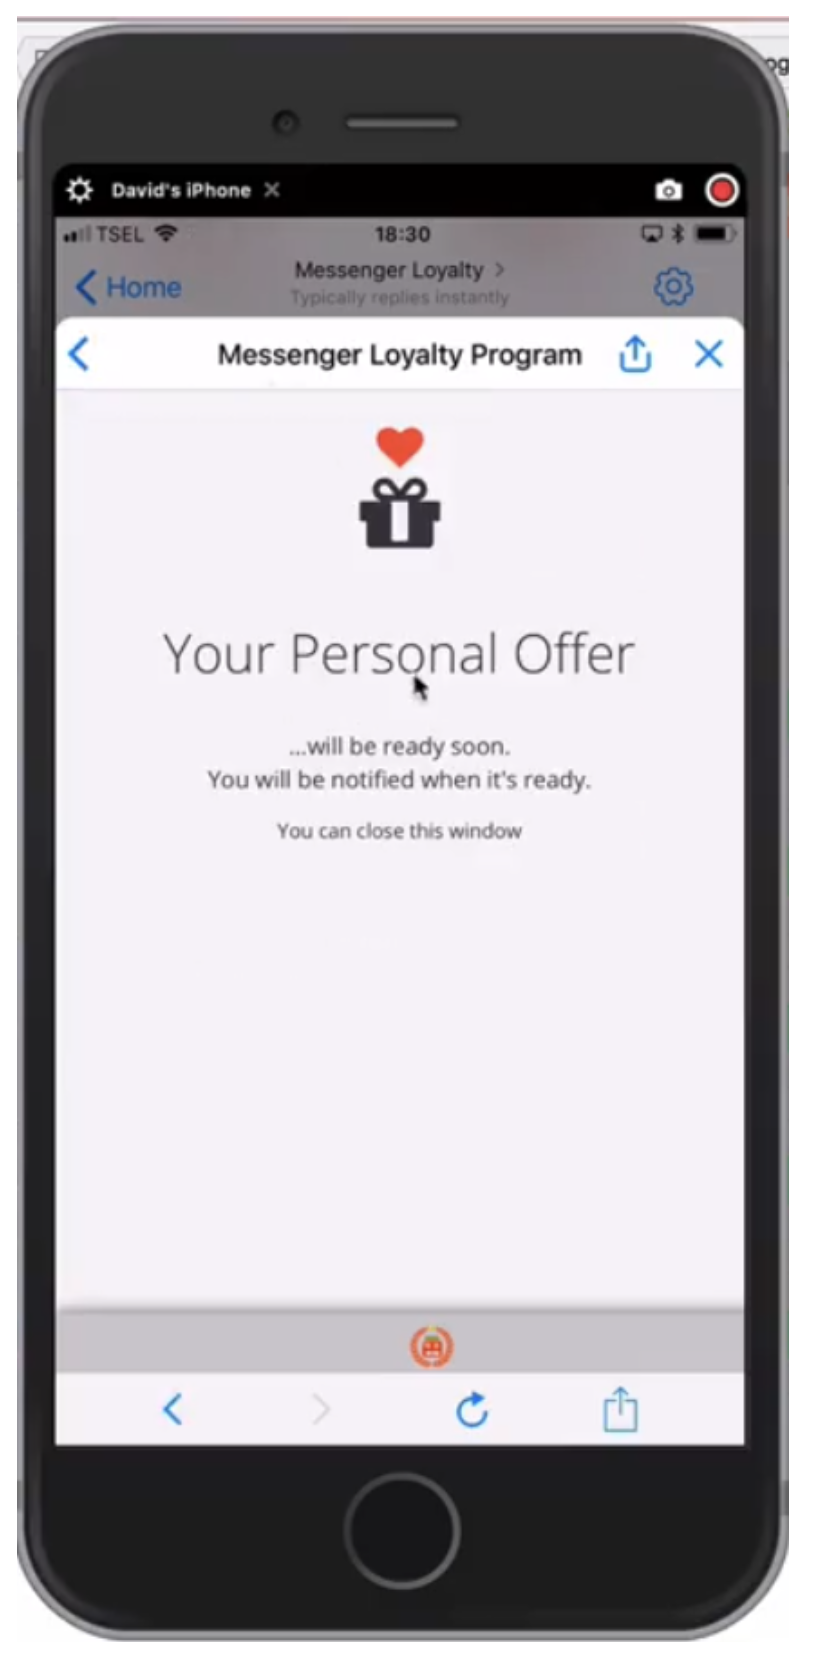 messenger loyalty program confirmation offer 